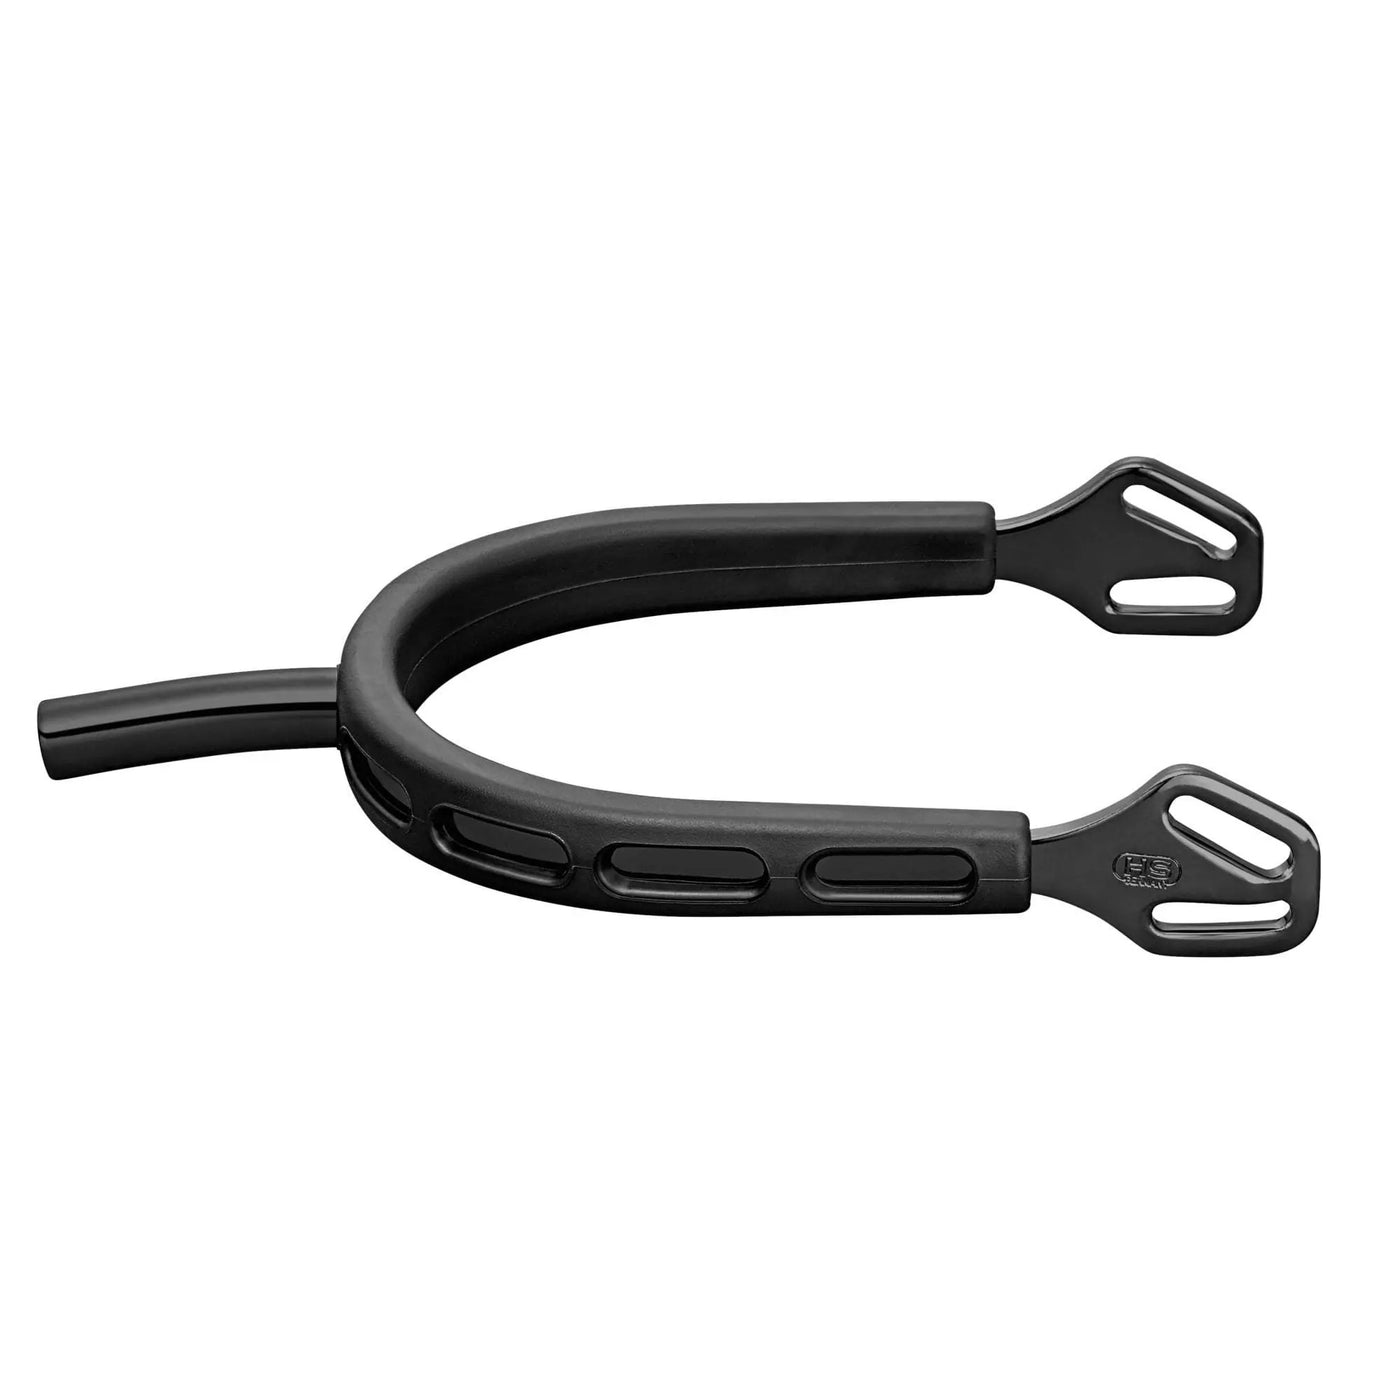 Sprenger Ultra Fit Extra Grip Sporer, Black Series